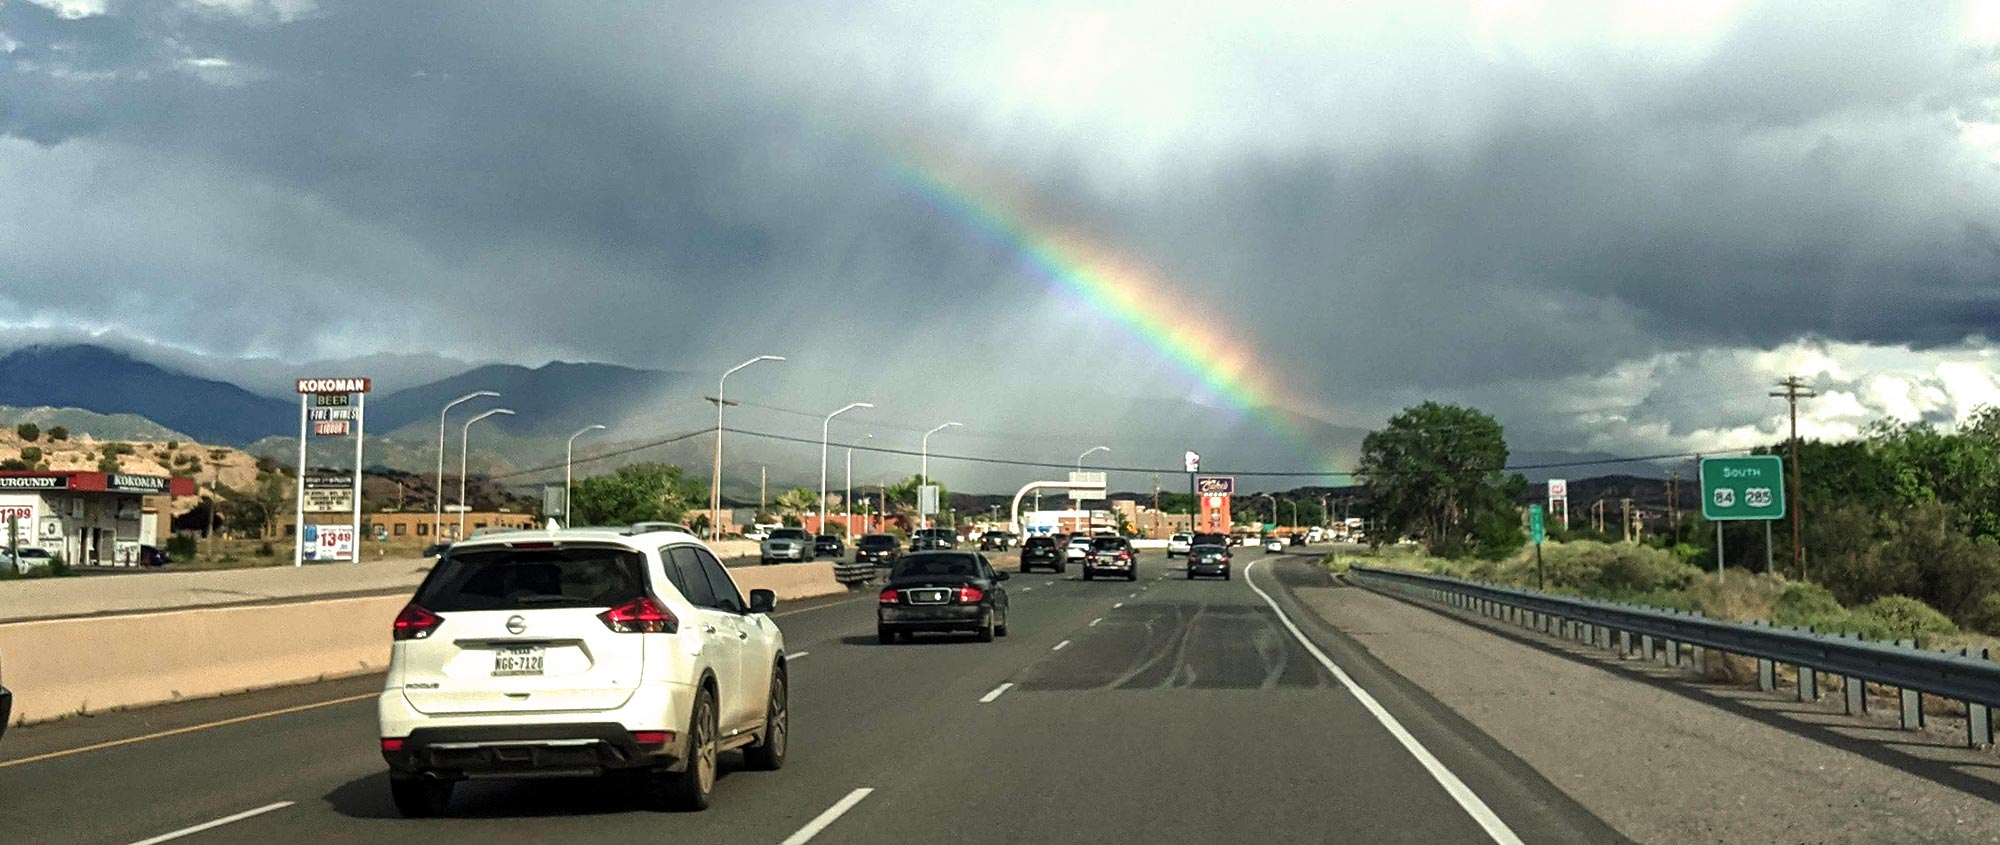 The beauty of Tesuque with walking rain and rainbow heading South into Santa Fe, New Mexico.